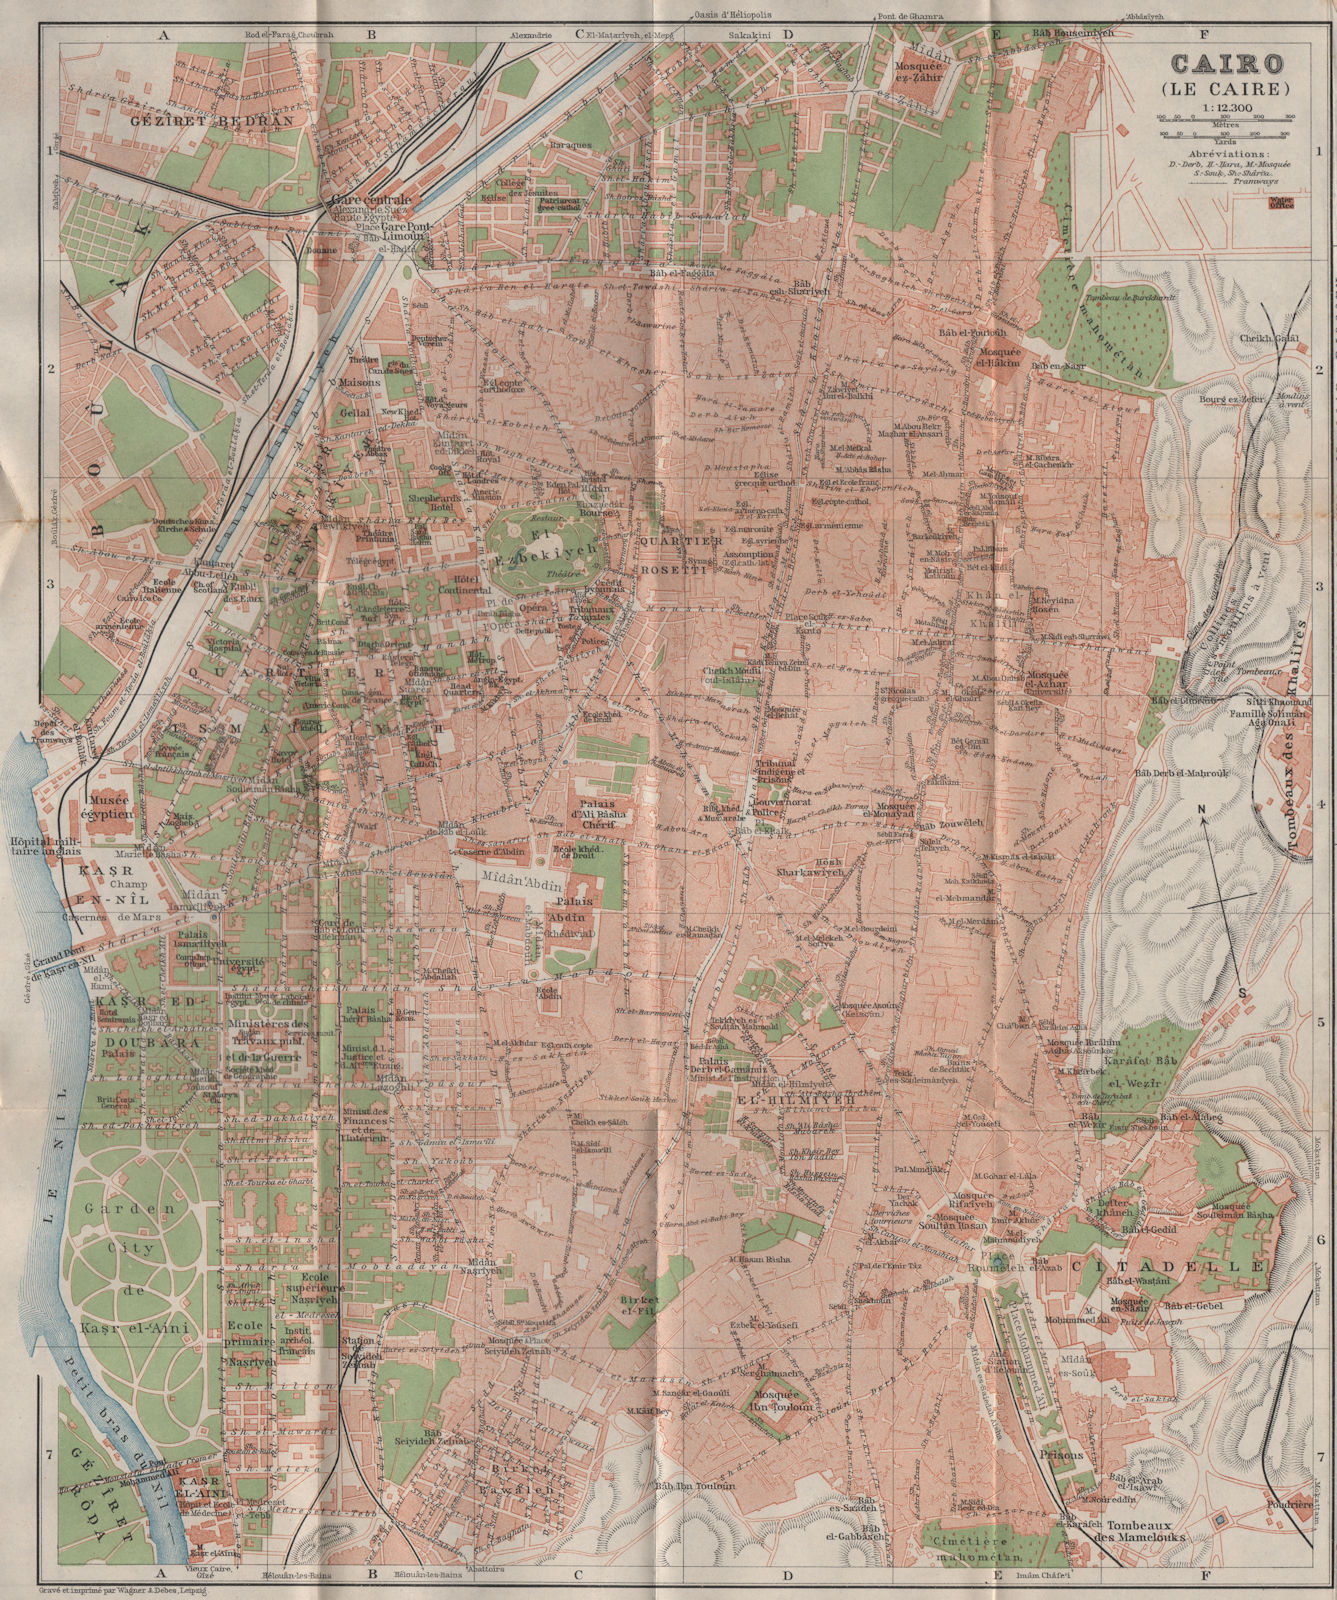 Associate Product CAIRO / LE CAIRE antique town city plan. Egypt. BAEDEKER 1911 old map